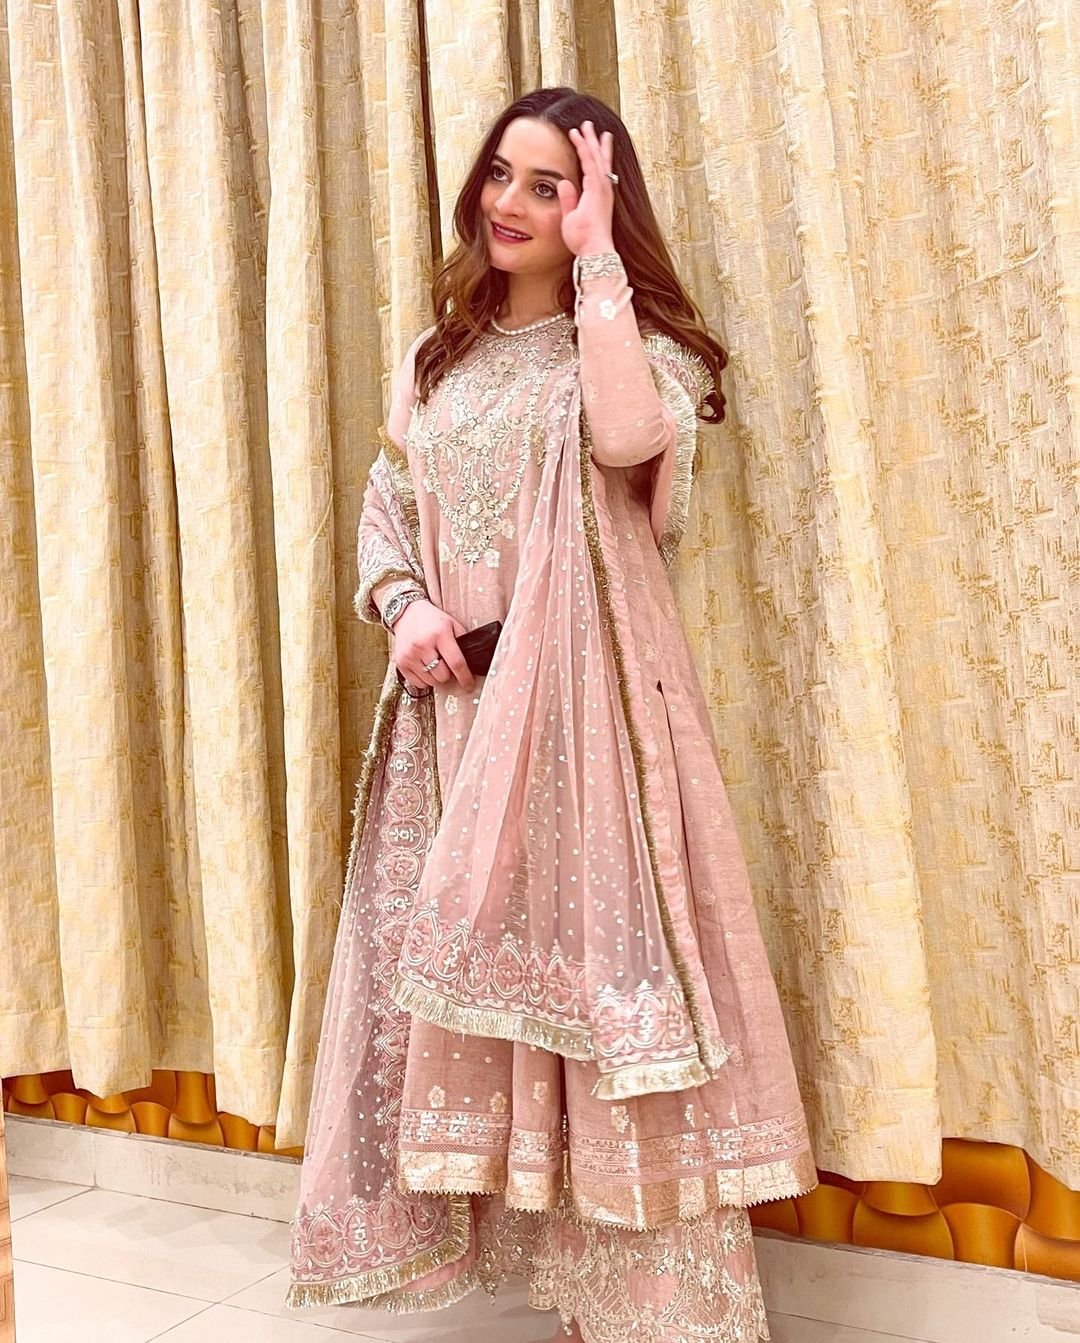 Aiman Khan is all set for wedding season